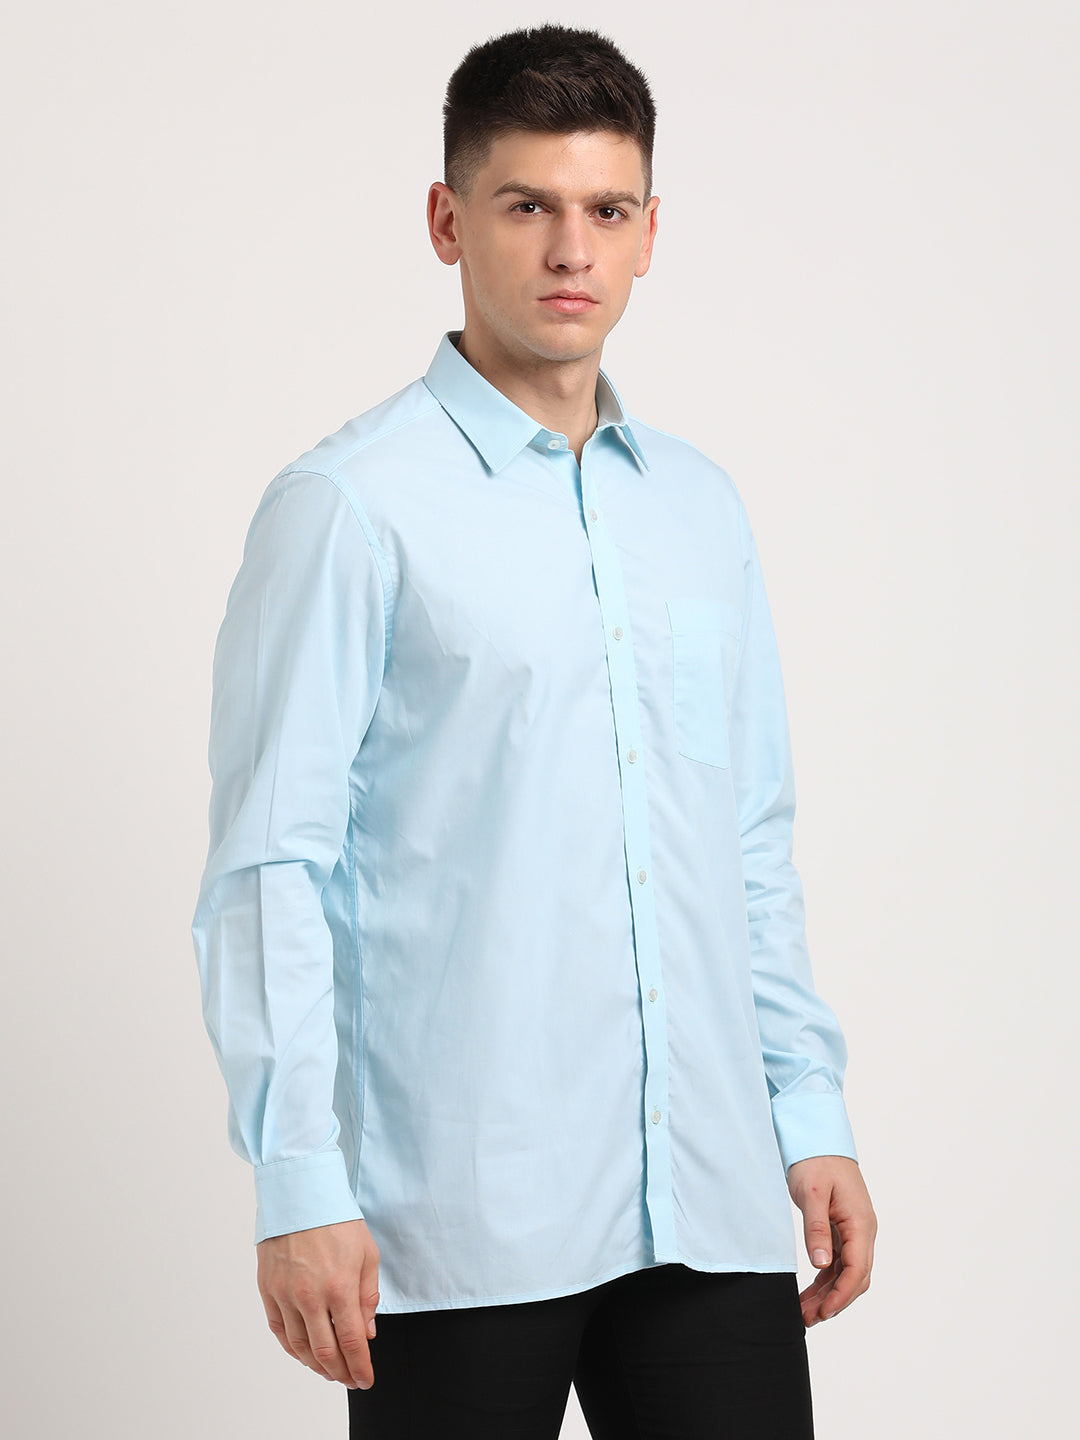 100% Cotton Sky Blue Plain Regular Fit Full Sleeve Formal Shirt